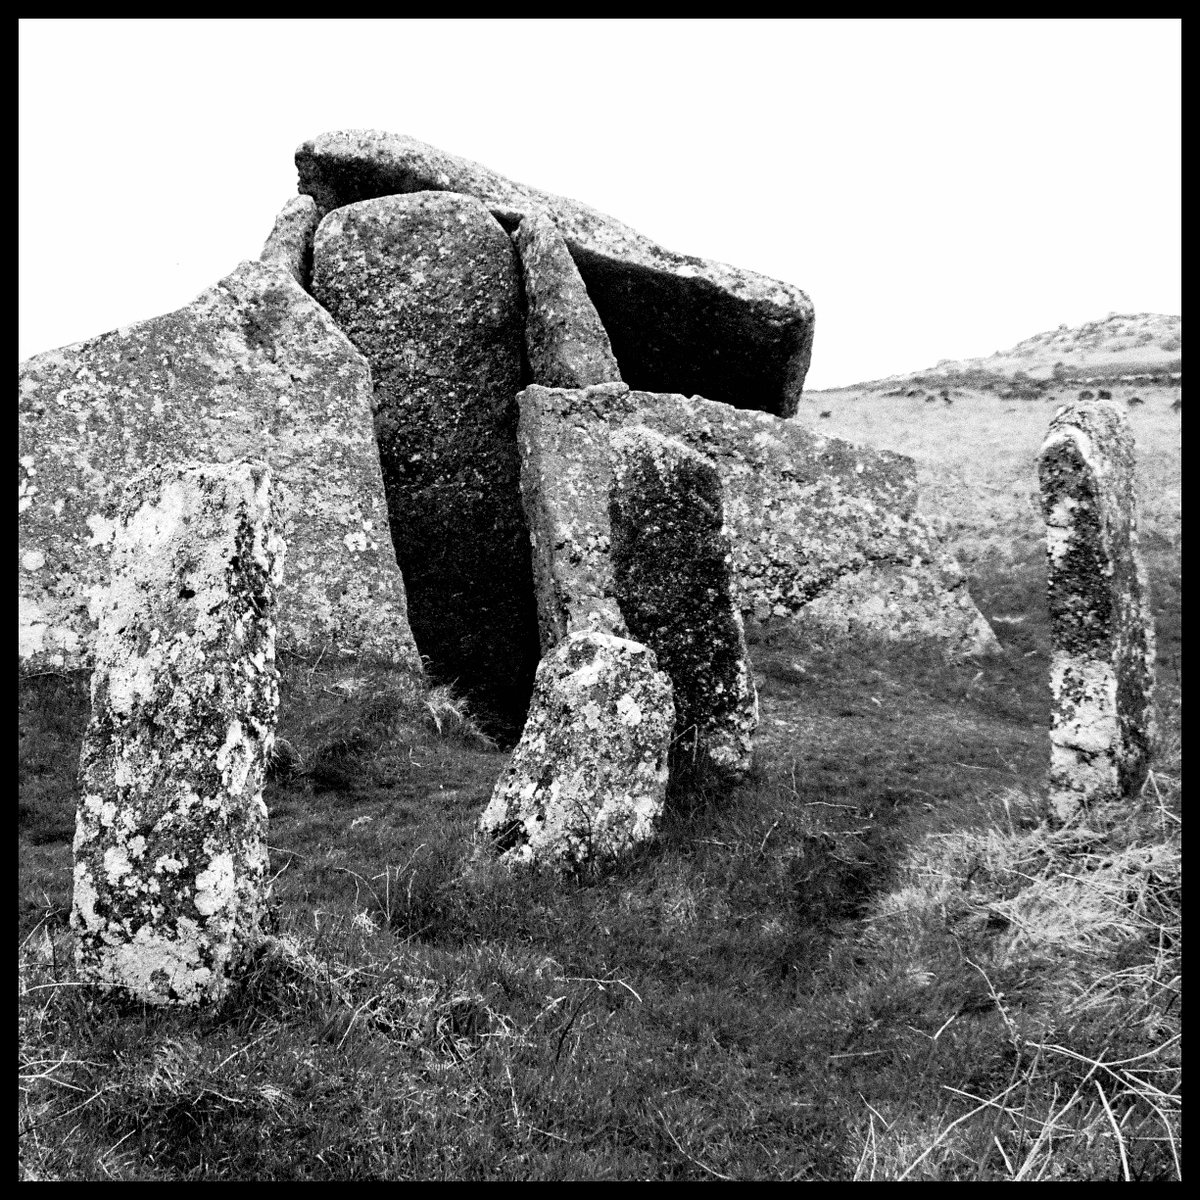 Zennor Quoit, ancient burial chamber, Cornwall #bnw #bnwphotography #blackandwhite #blackandwhitephotography #monochrome #dolmen #cornwall #filmphotography #ishootfilm